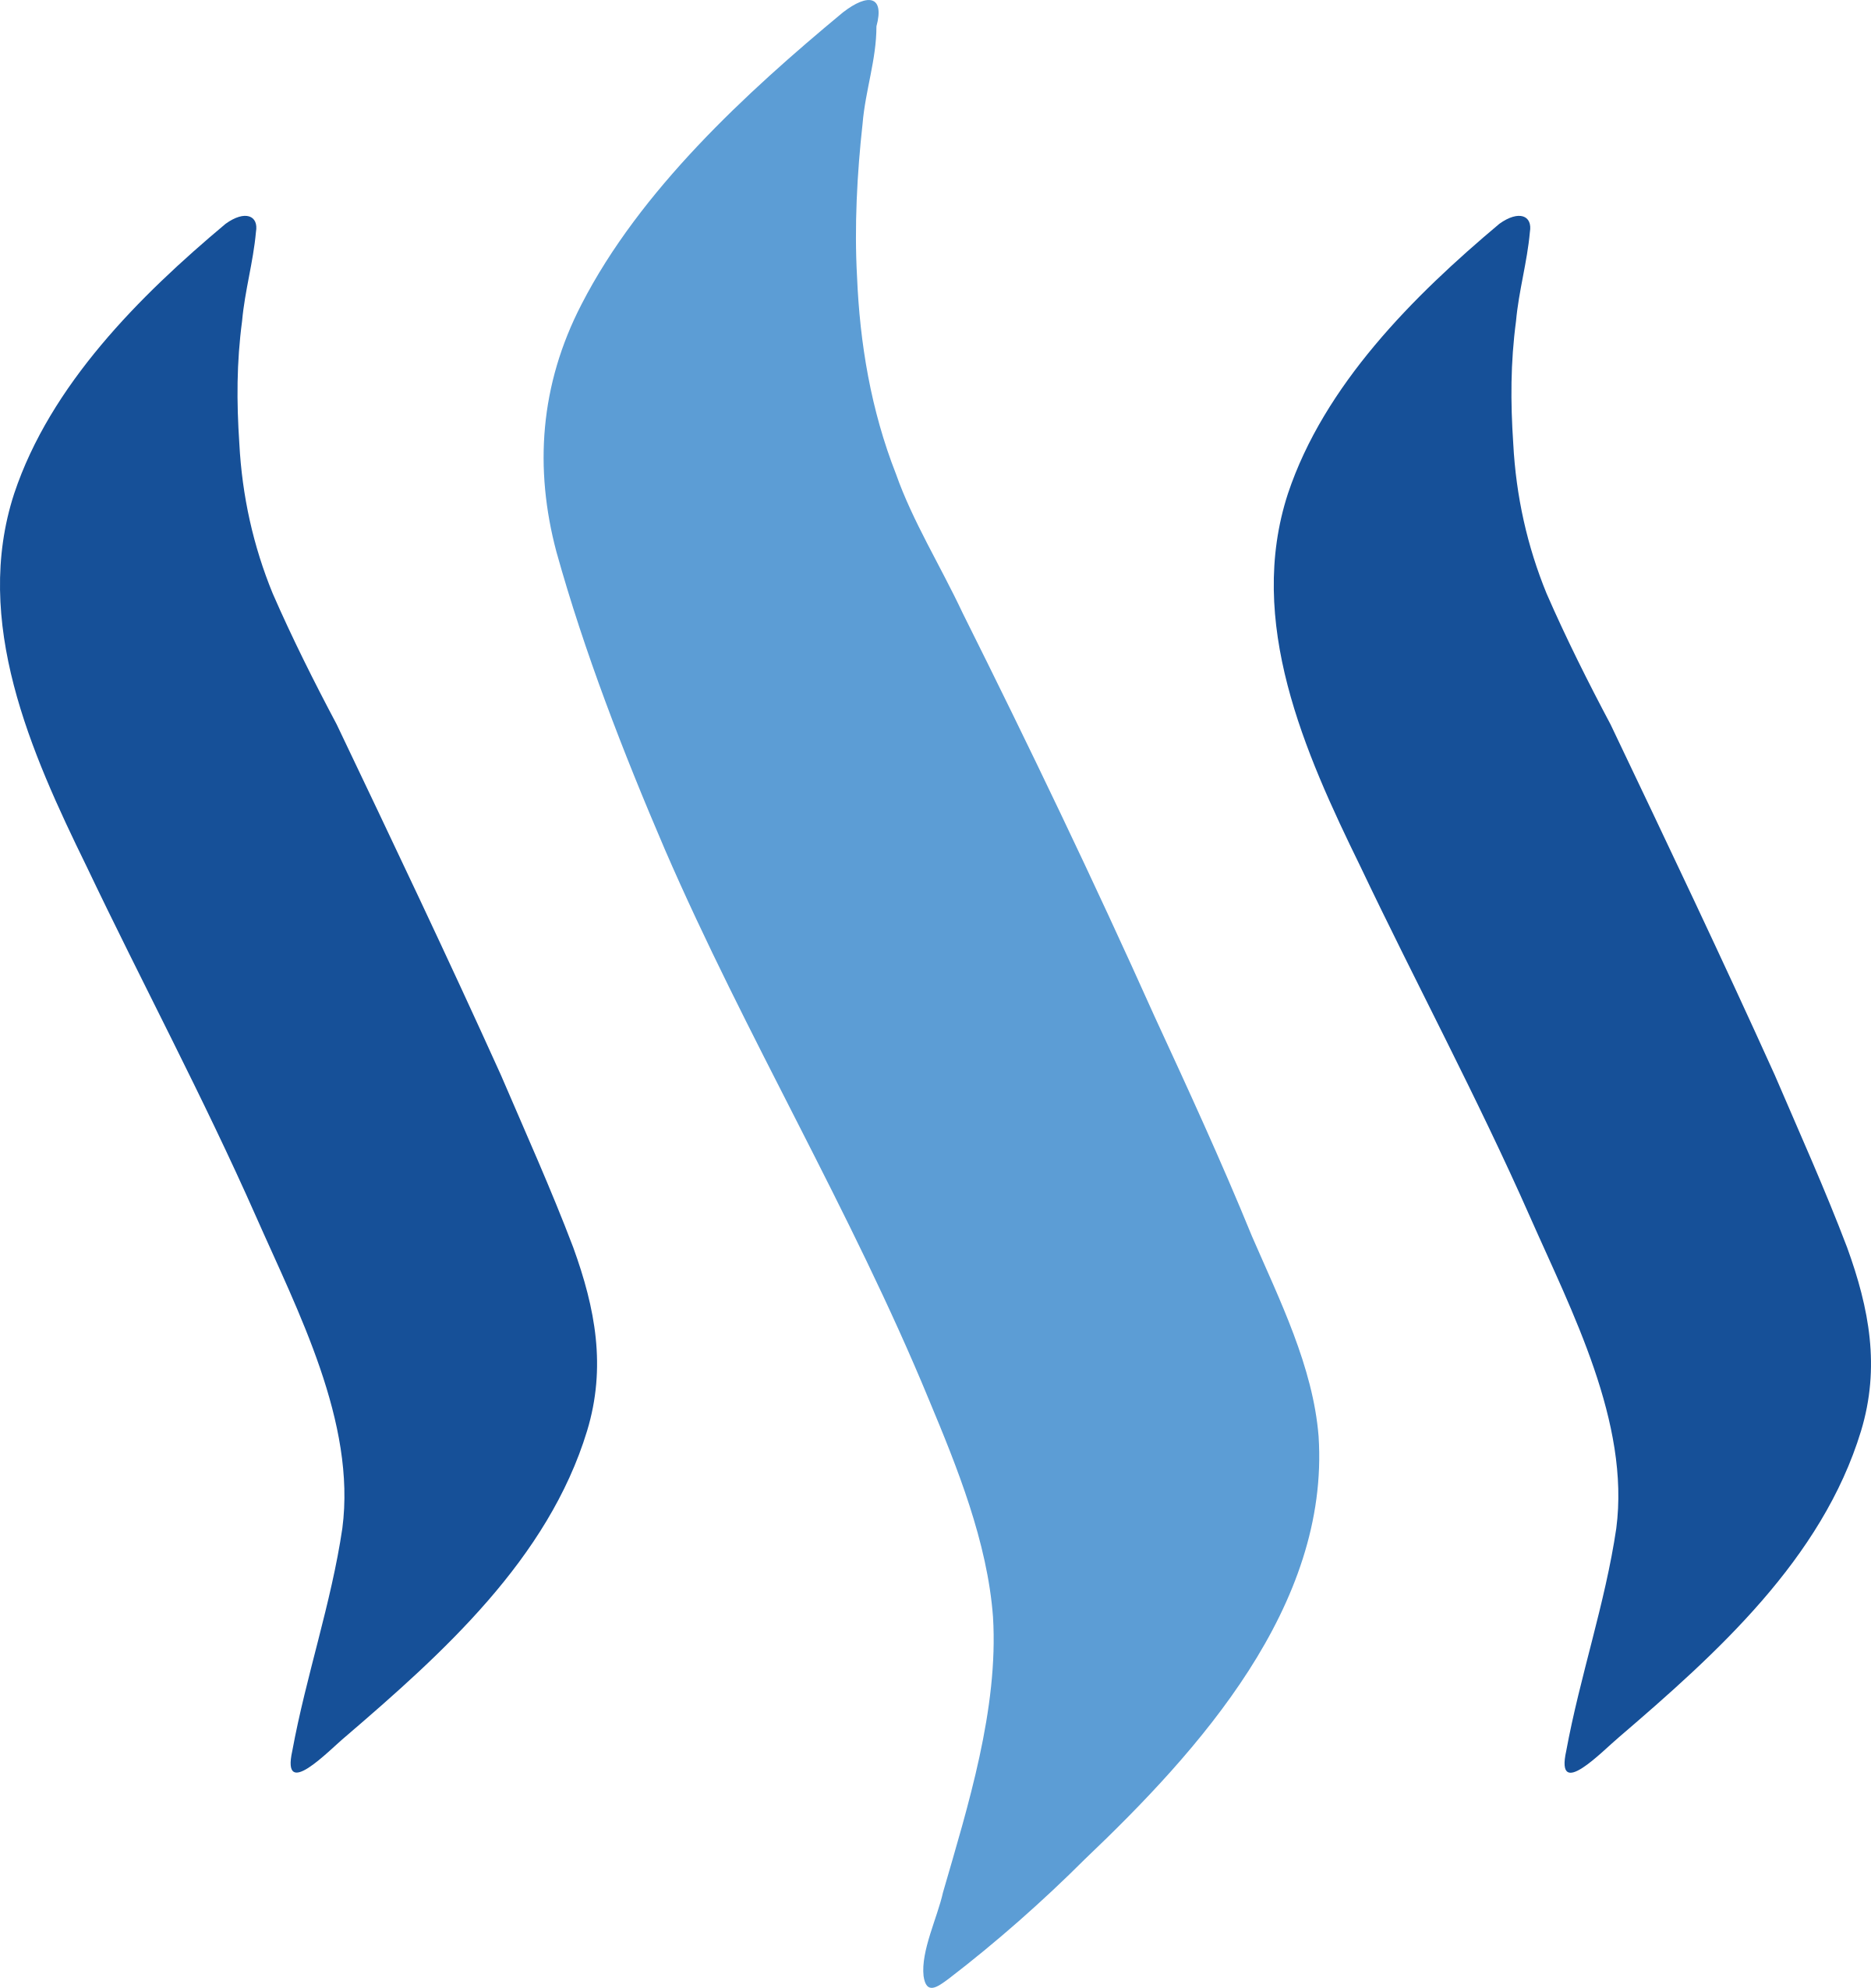 Steemit Logo Black And White - Steemit Logo Png (2400x2550)